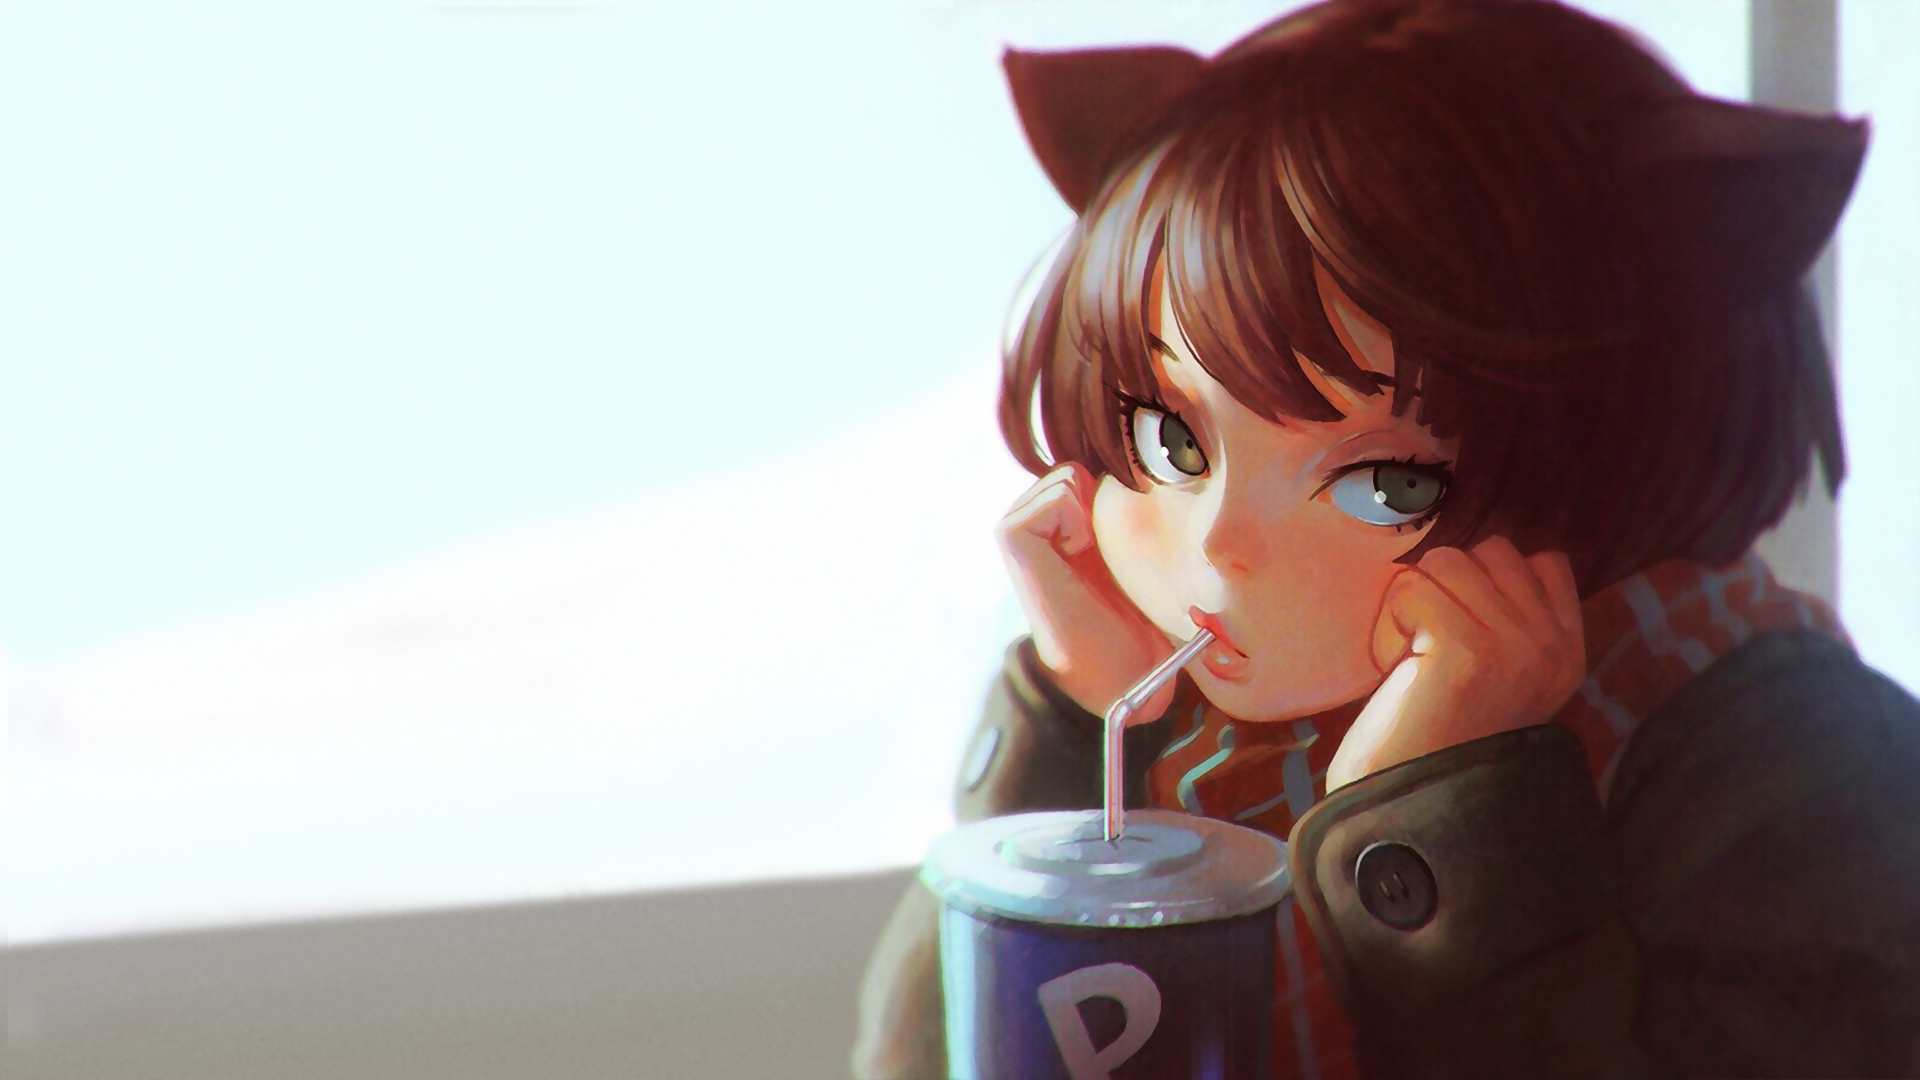 Wallpaper Cute anime girl drinking coffee